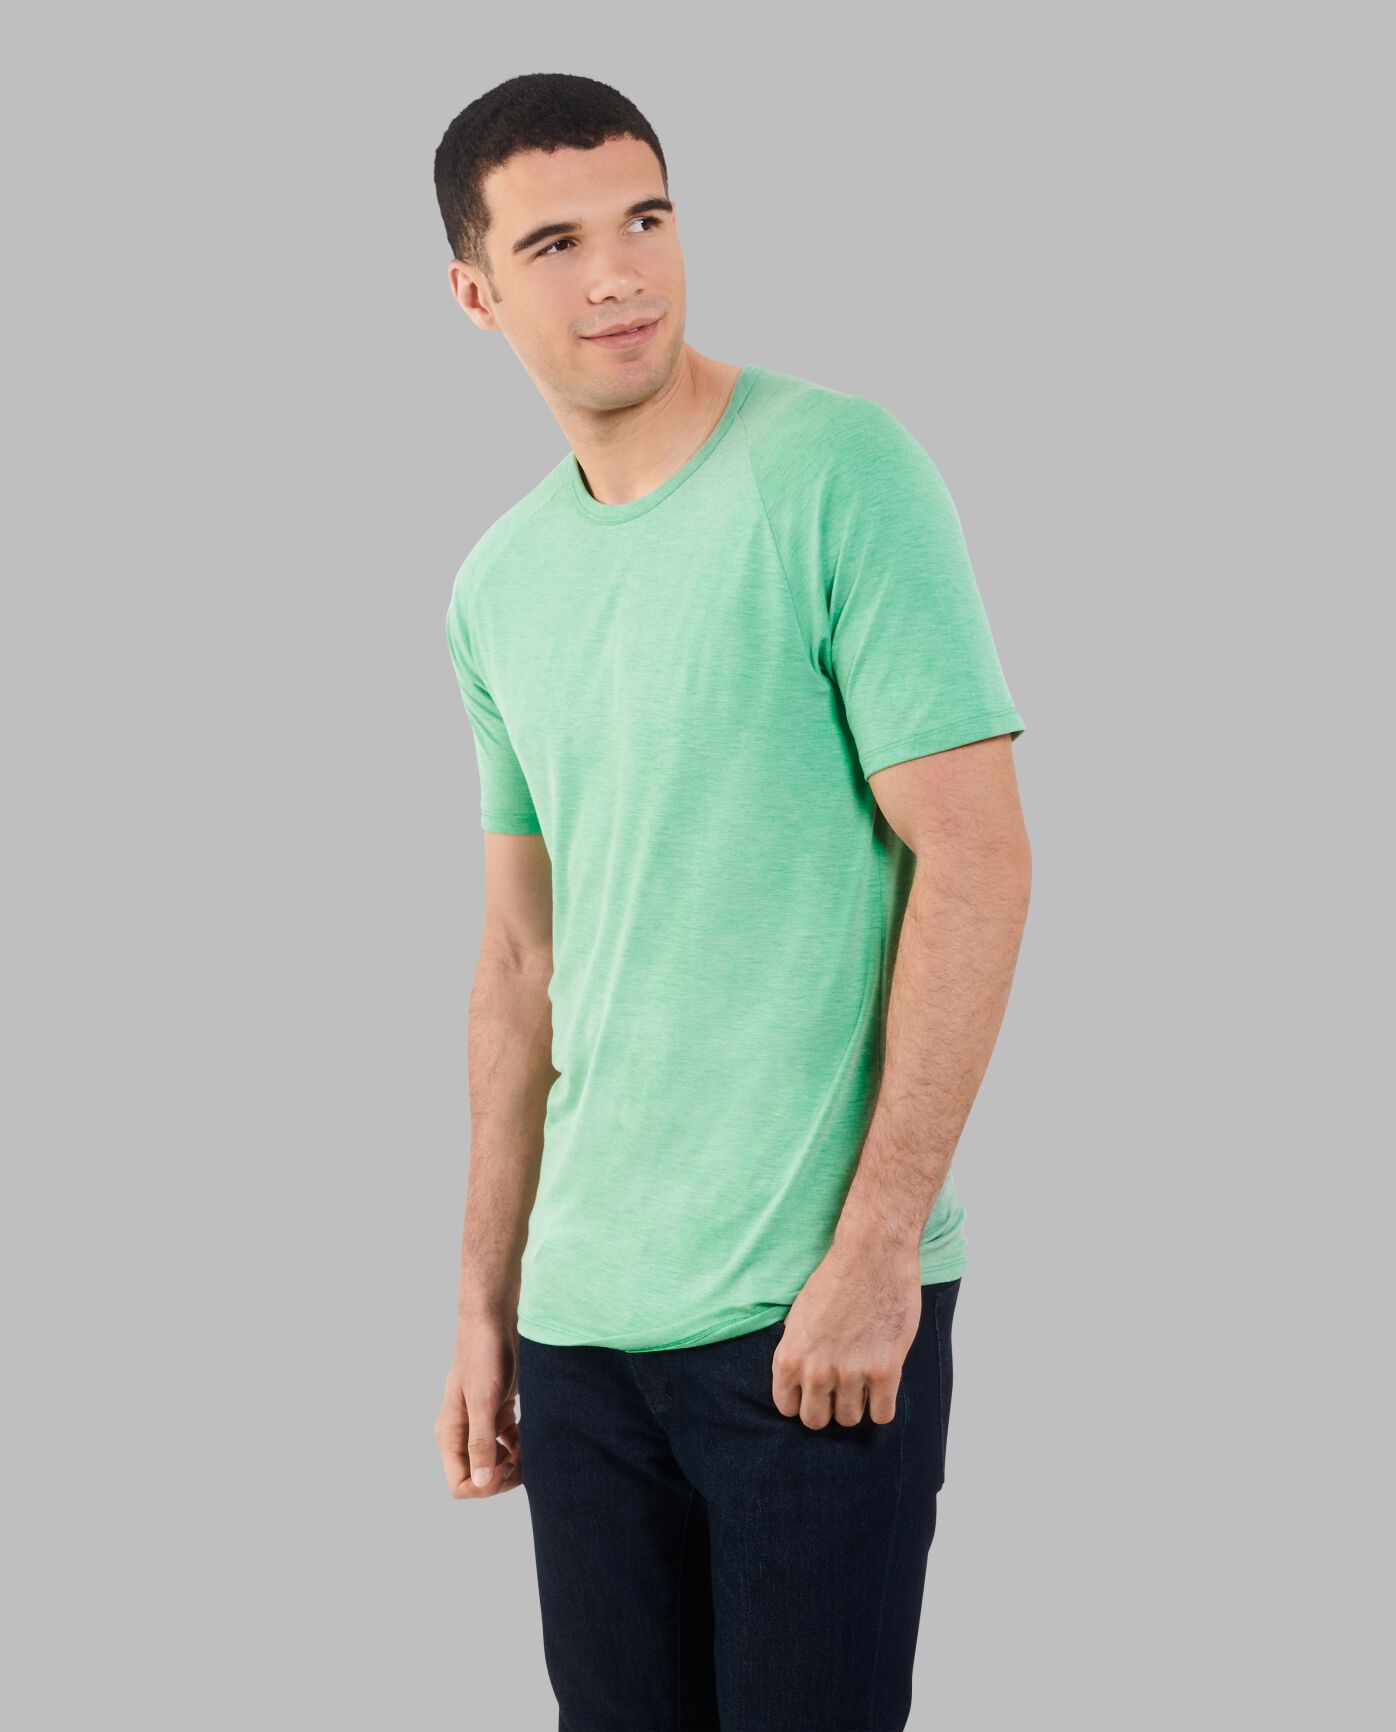 Senatet Terapi Voksen Men's Short Sleeve EverLight™ Raglan T-Shirt, 2 Pack